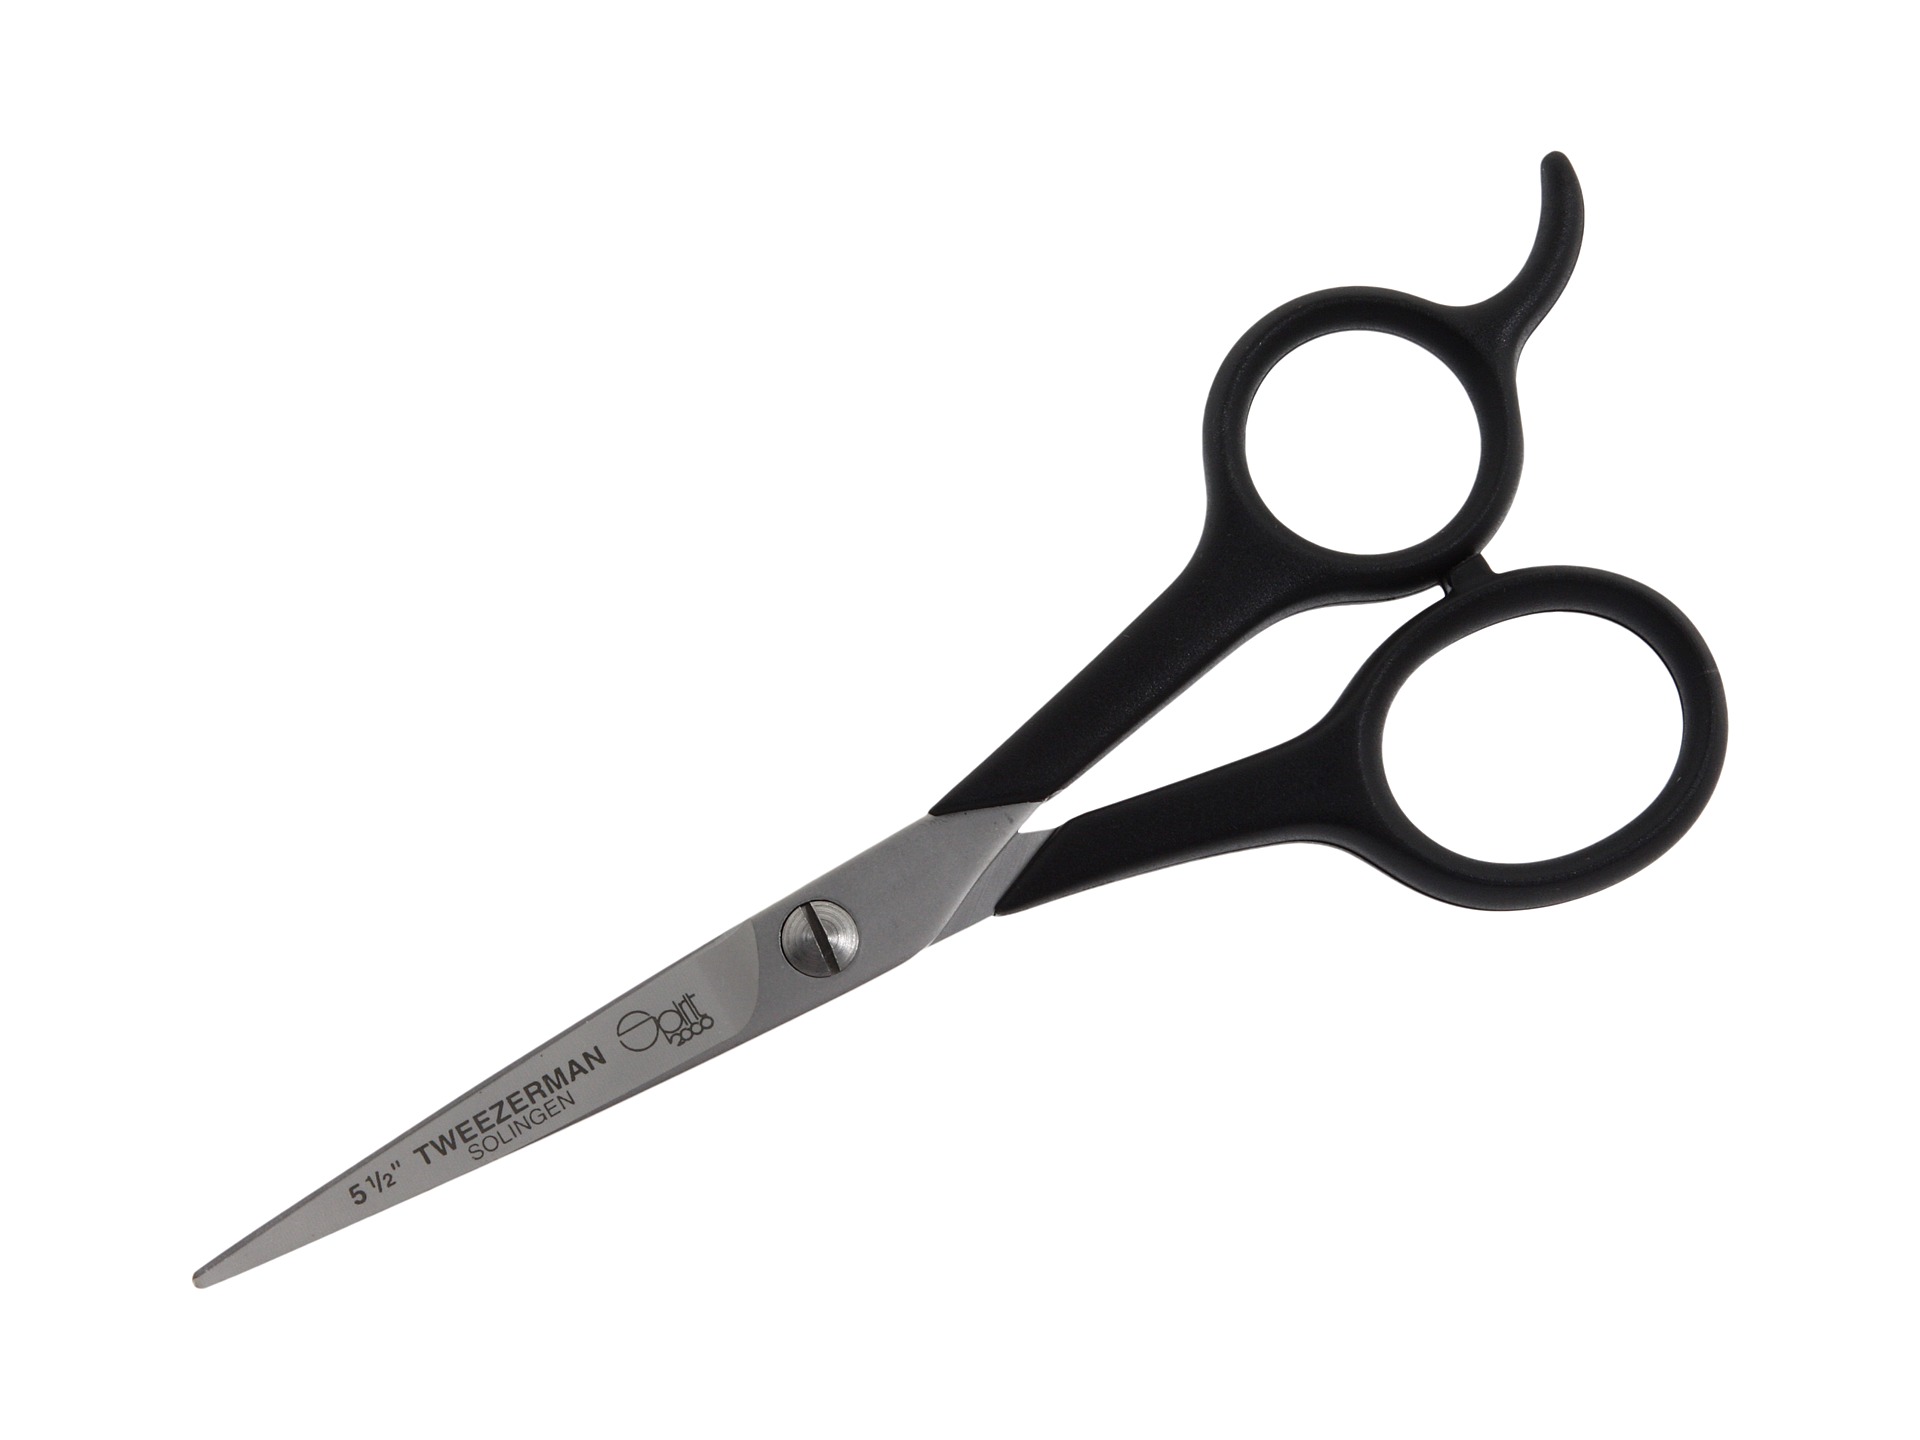 Free Hairdresser Scissors Cliparts, Download Free Clip Art.